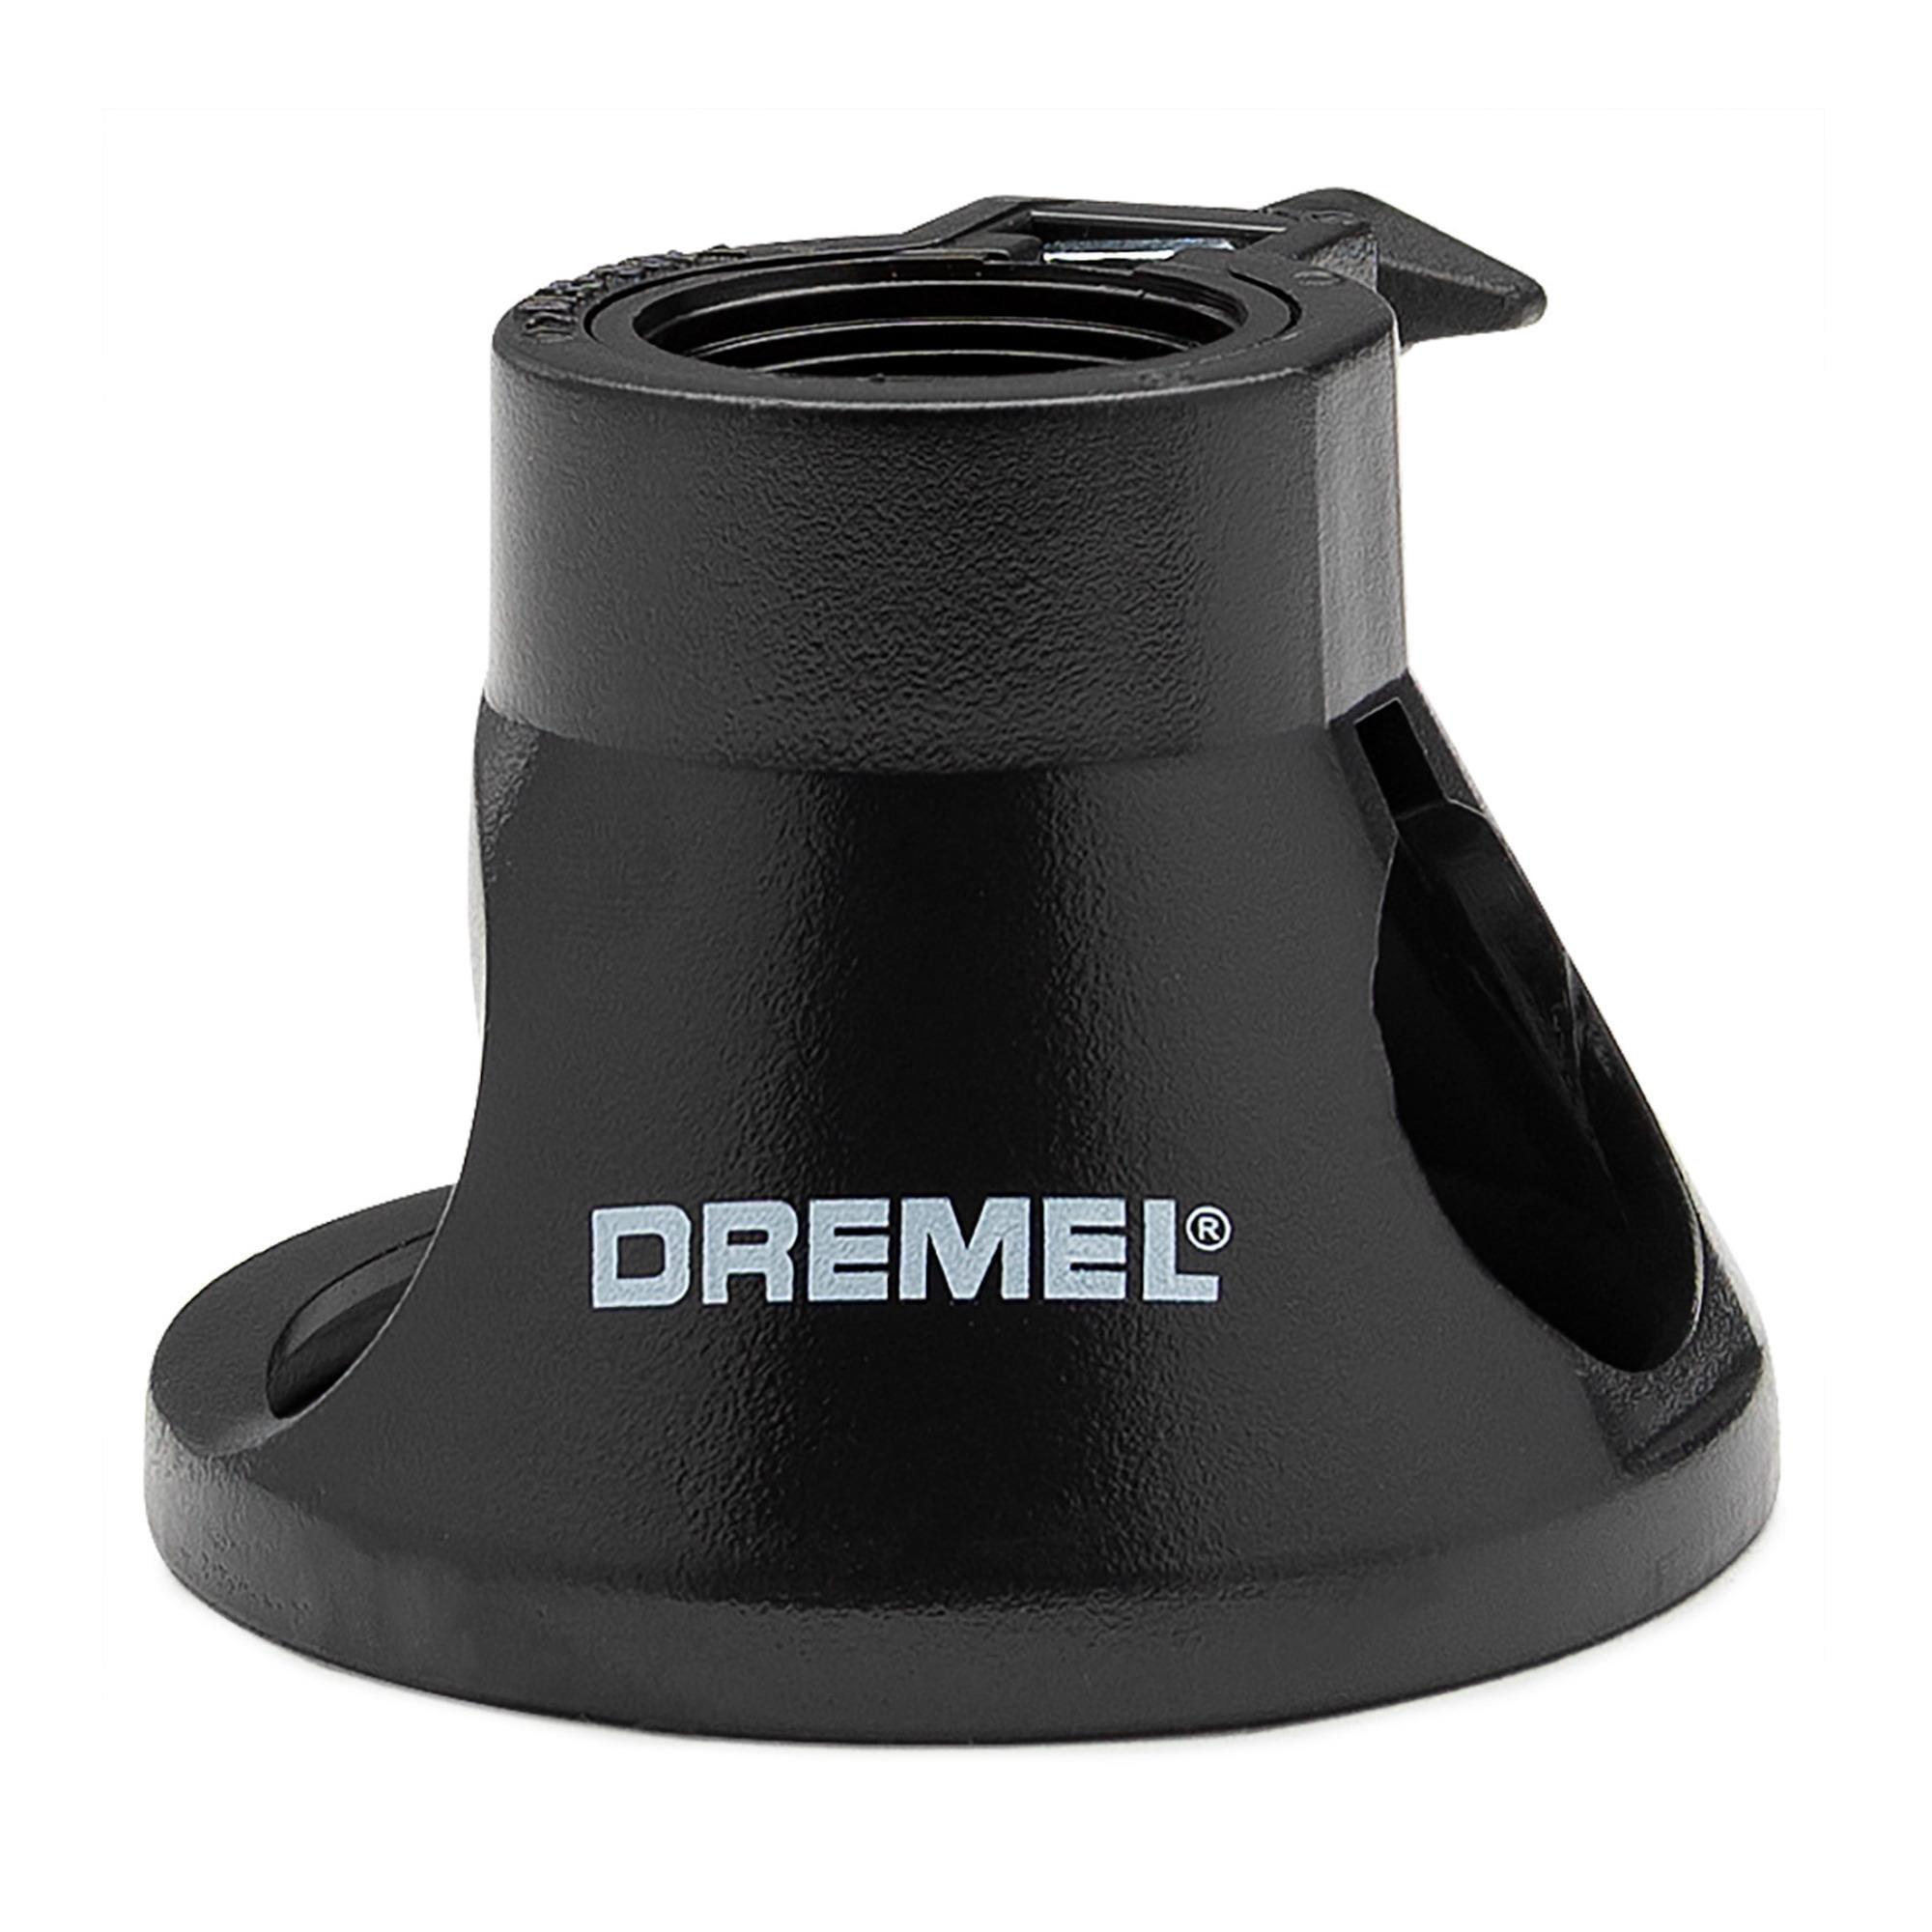 Dremel 4300-5/40 Performance Rotary Tool Kit with LED Light- 5